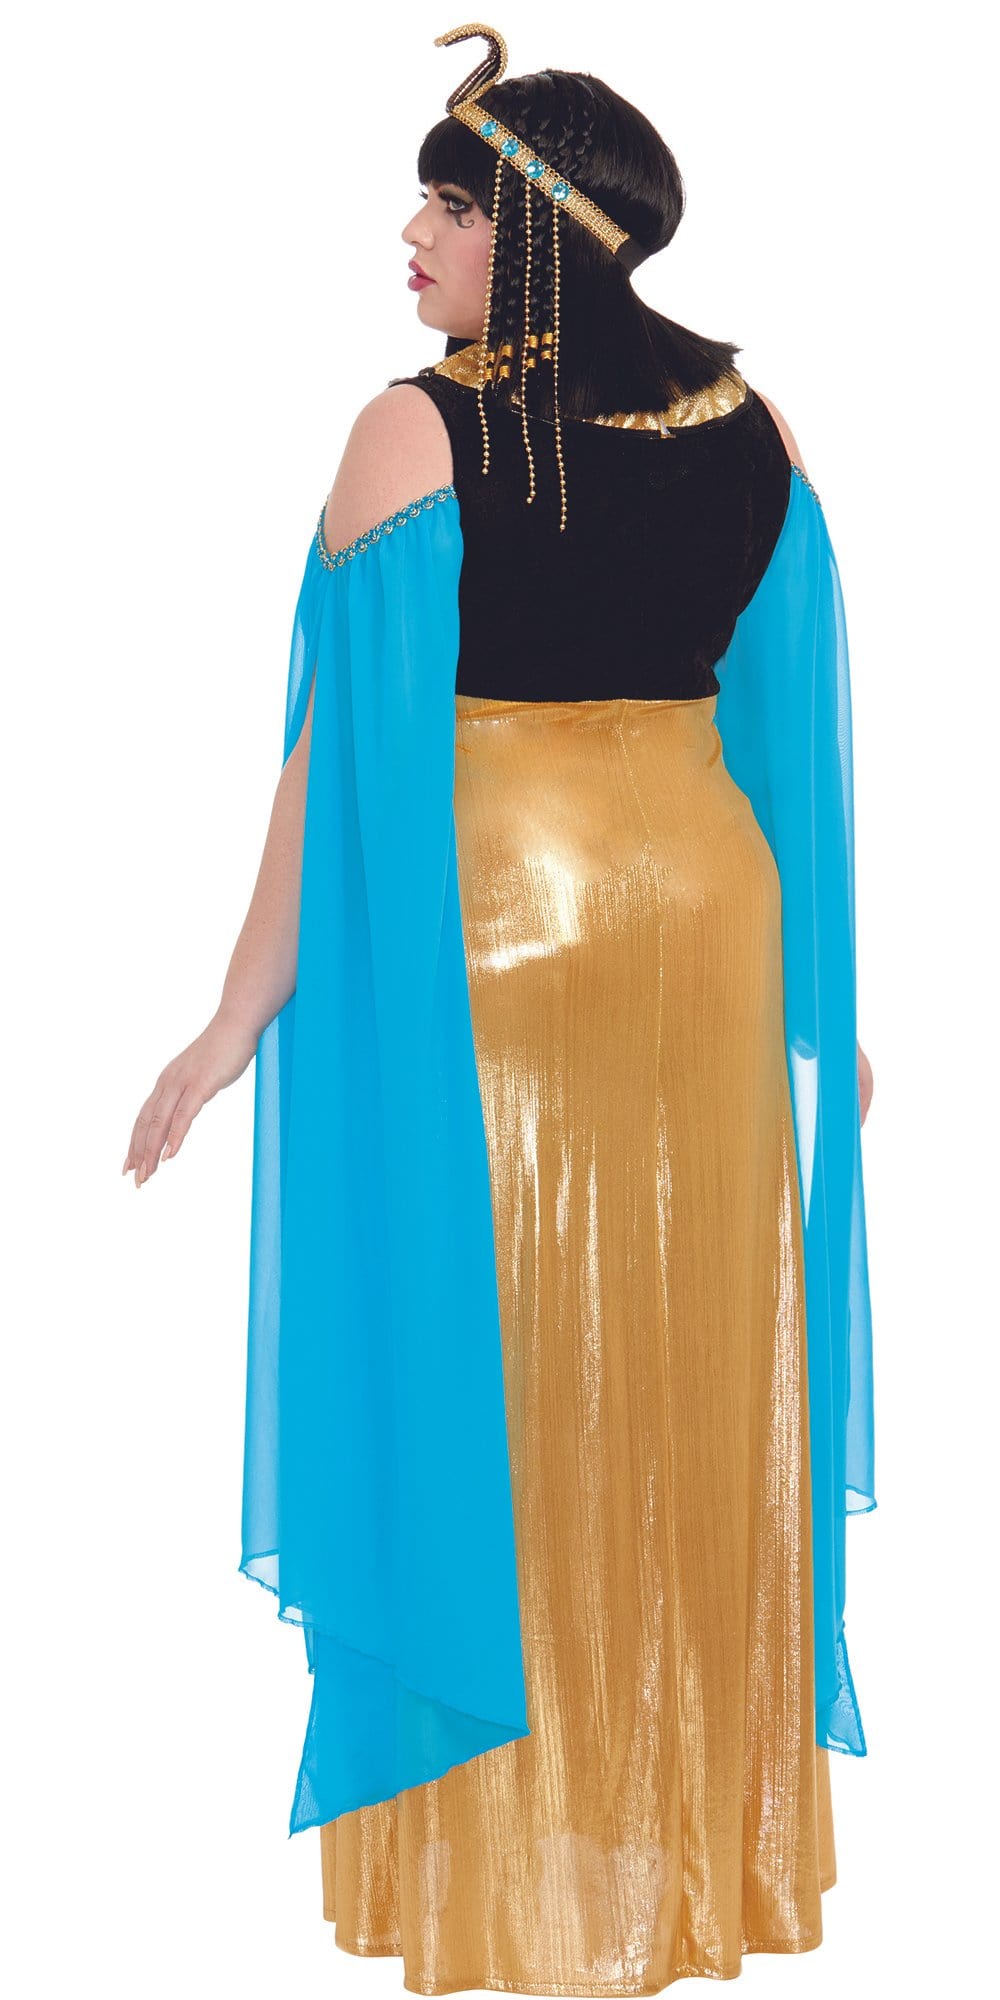 Sexy Plus Size Queen Cleopatra Women's Costume Musotica.com